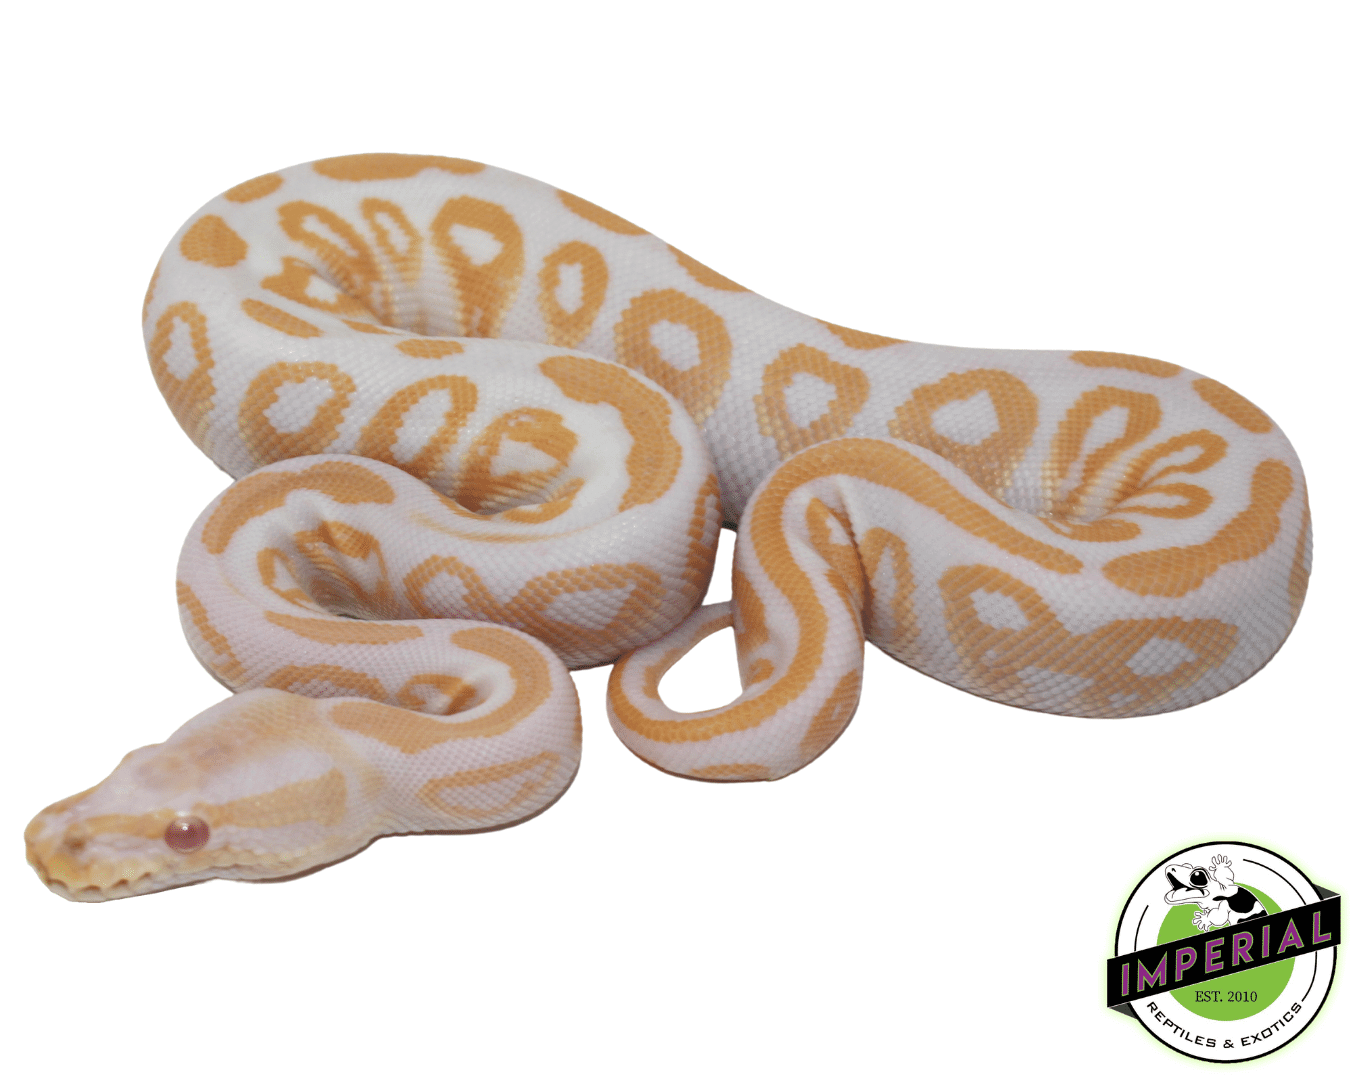 albino black pastel ball python for sale, buy reptiles online